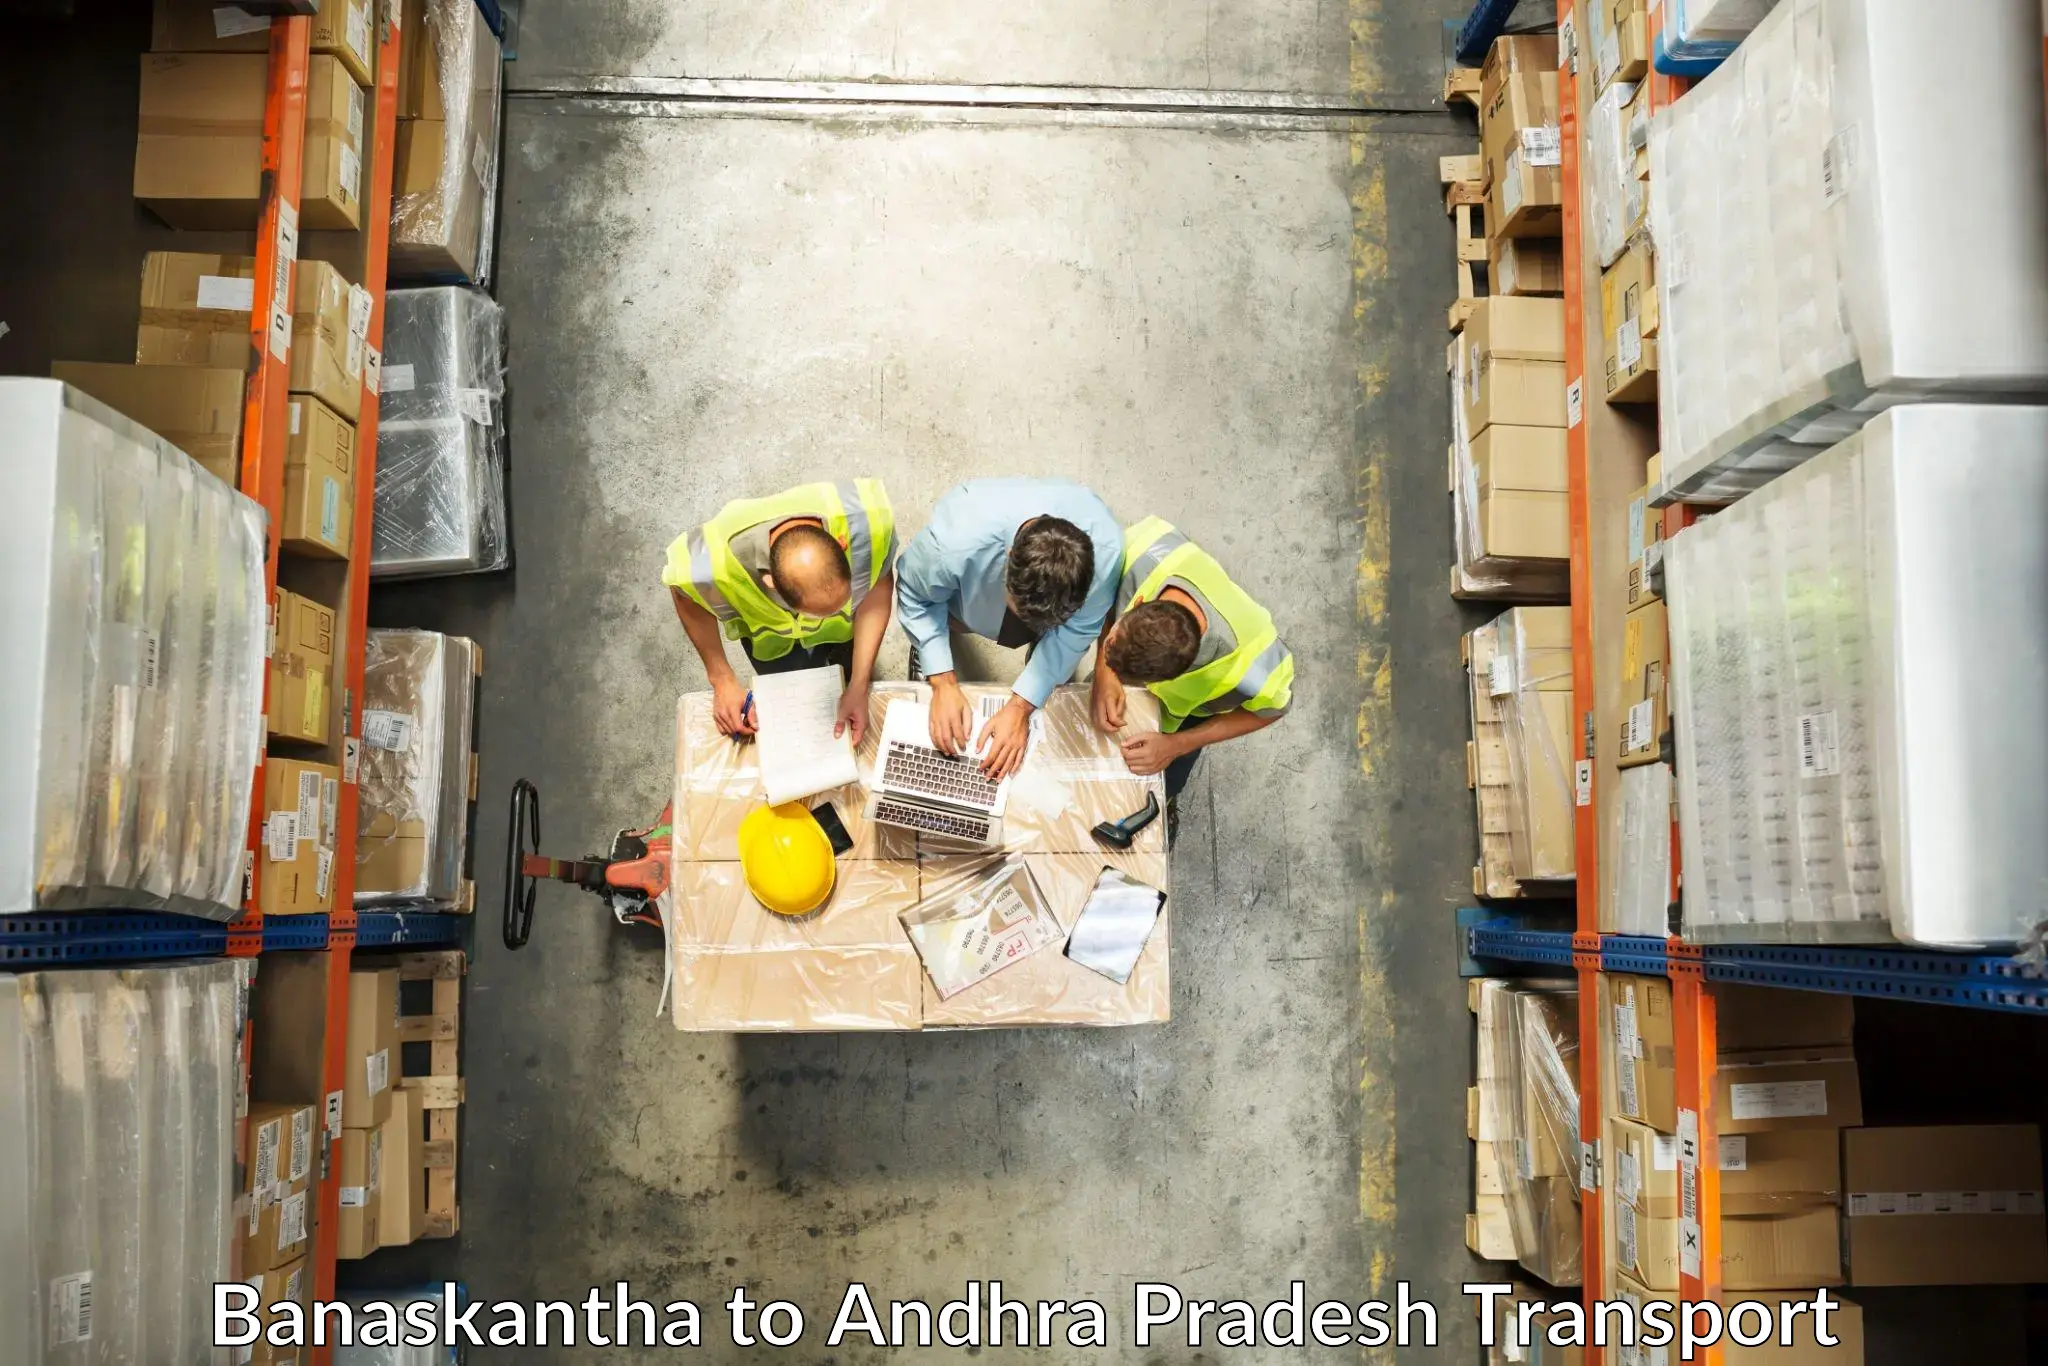 Truck transport companies in India Banaskantha to Pedapadu